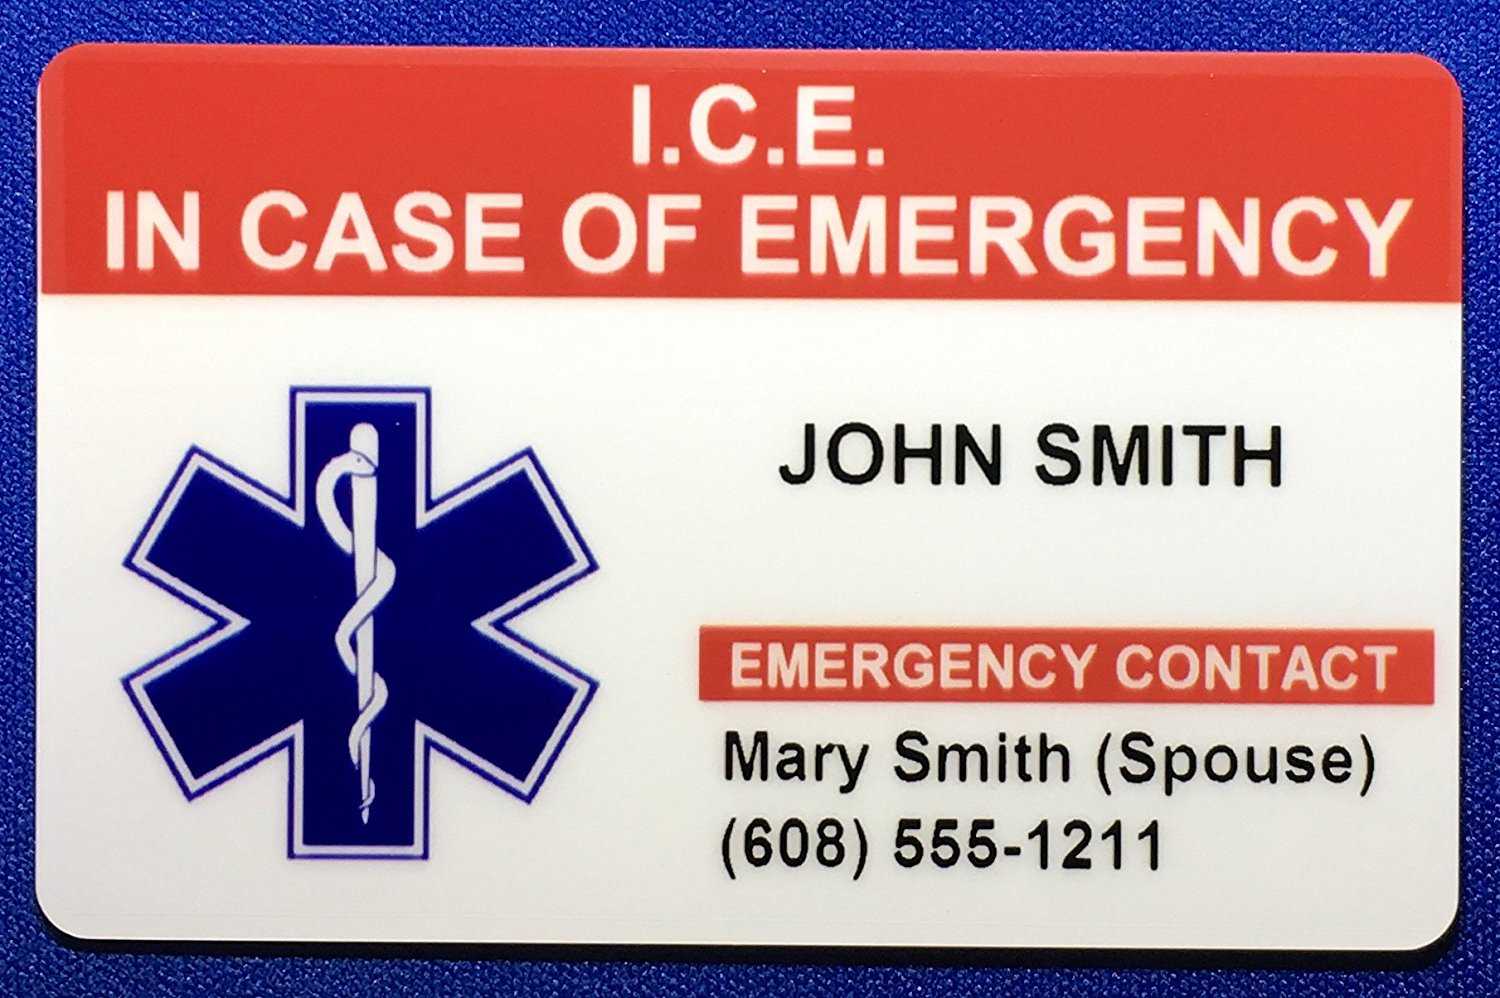 Cheap Emergency Card Template, Find Emergency Card Template With In Case Of Emergency Card Template